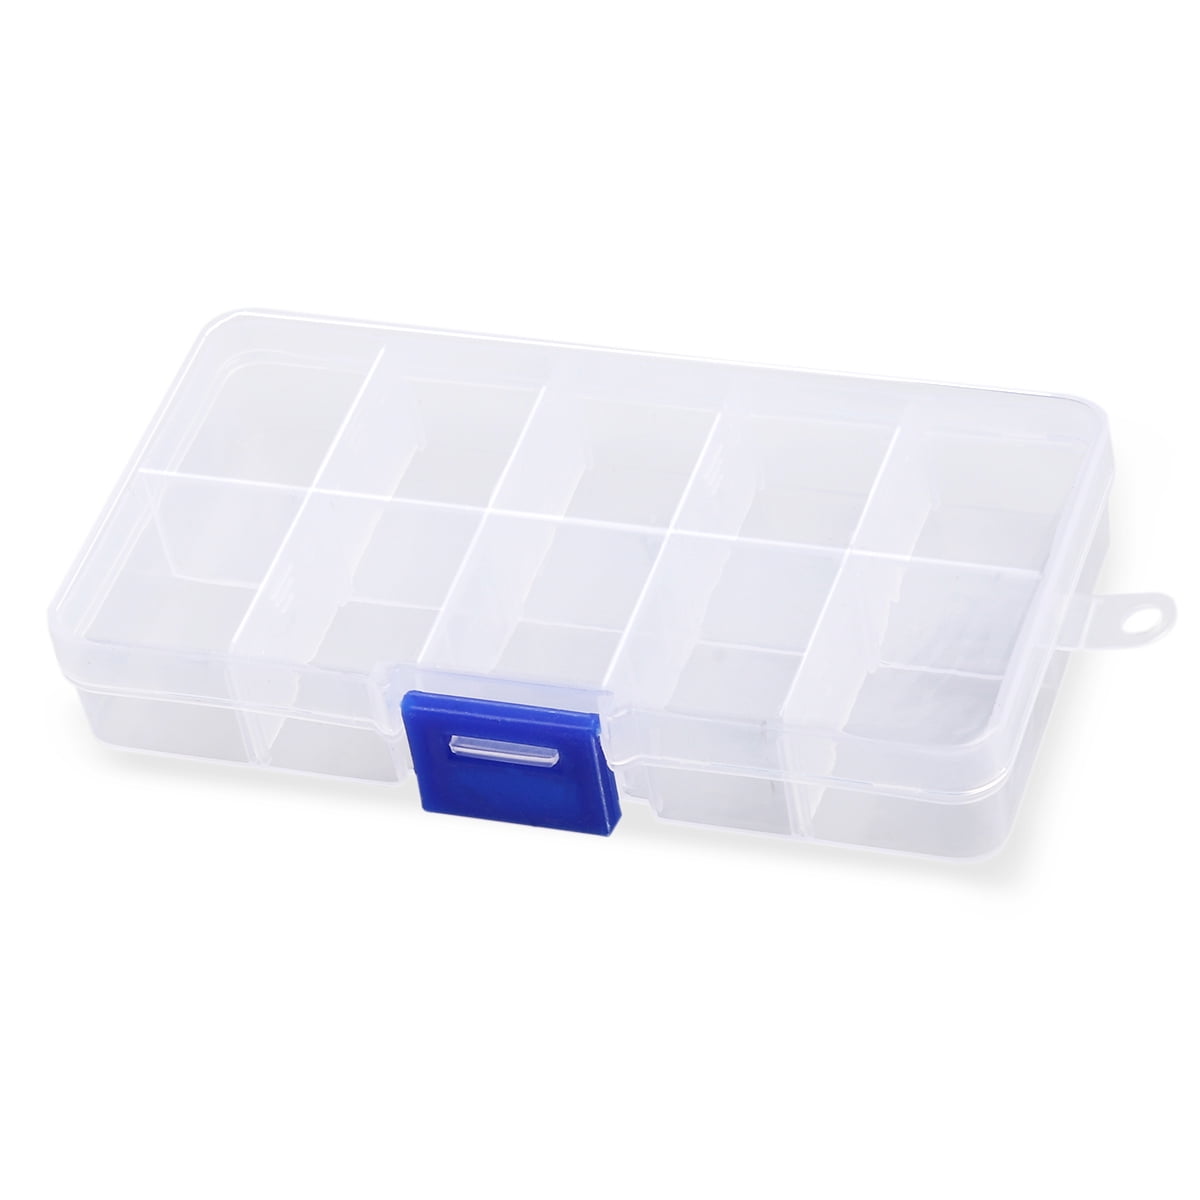 10-Grid Plastic Adjustable Jewelry Organizer Box Storage Container